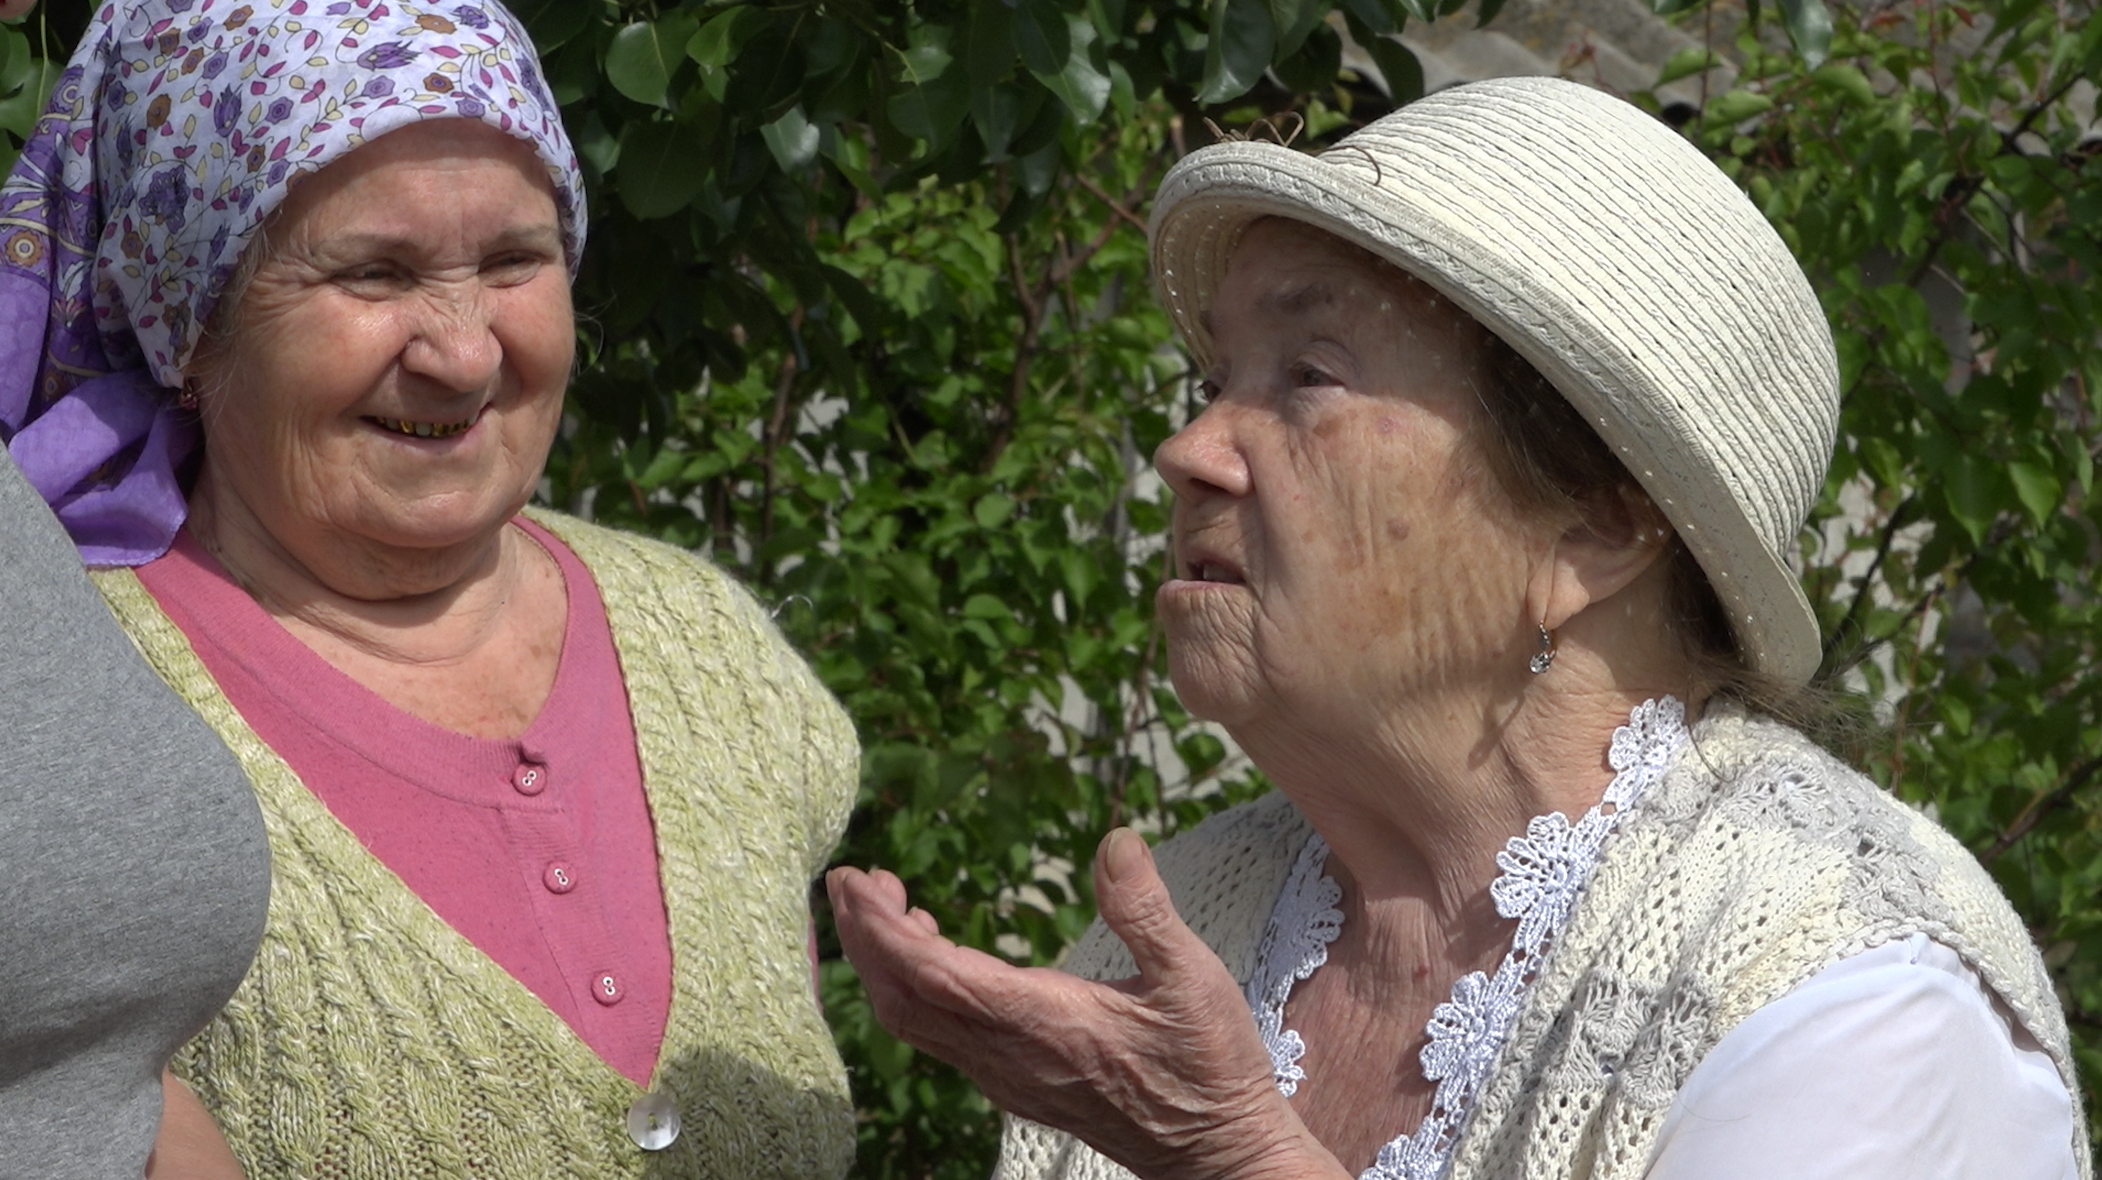 Two elderly ladies chatting